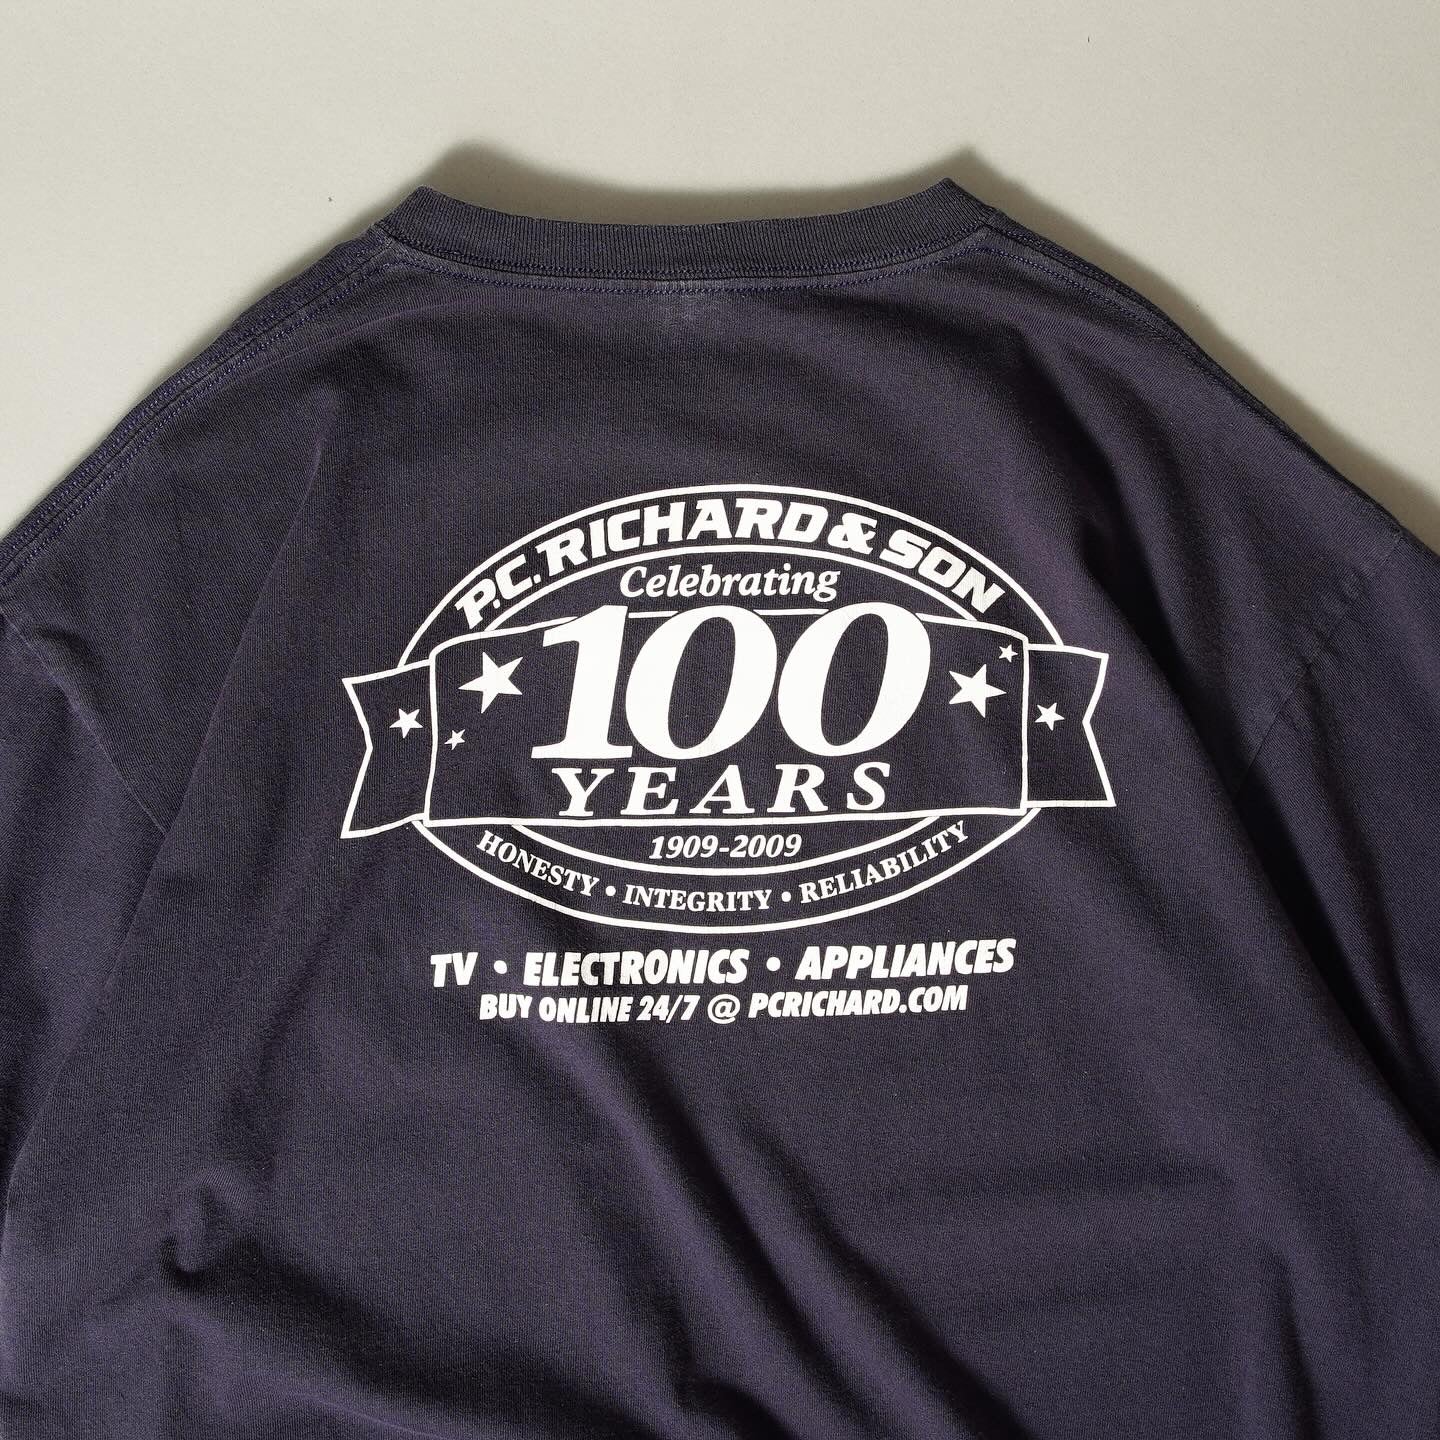 P.C. RICHARD & SON 100 Years Tee